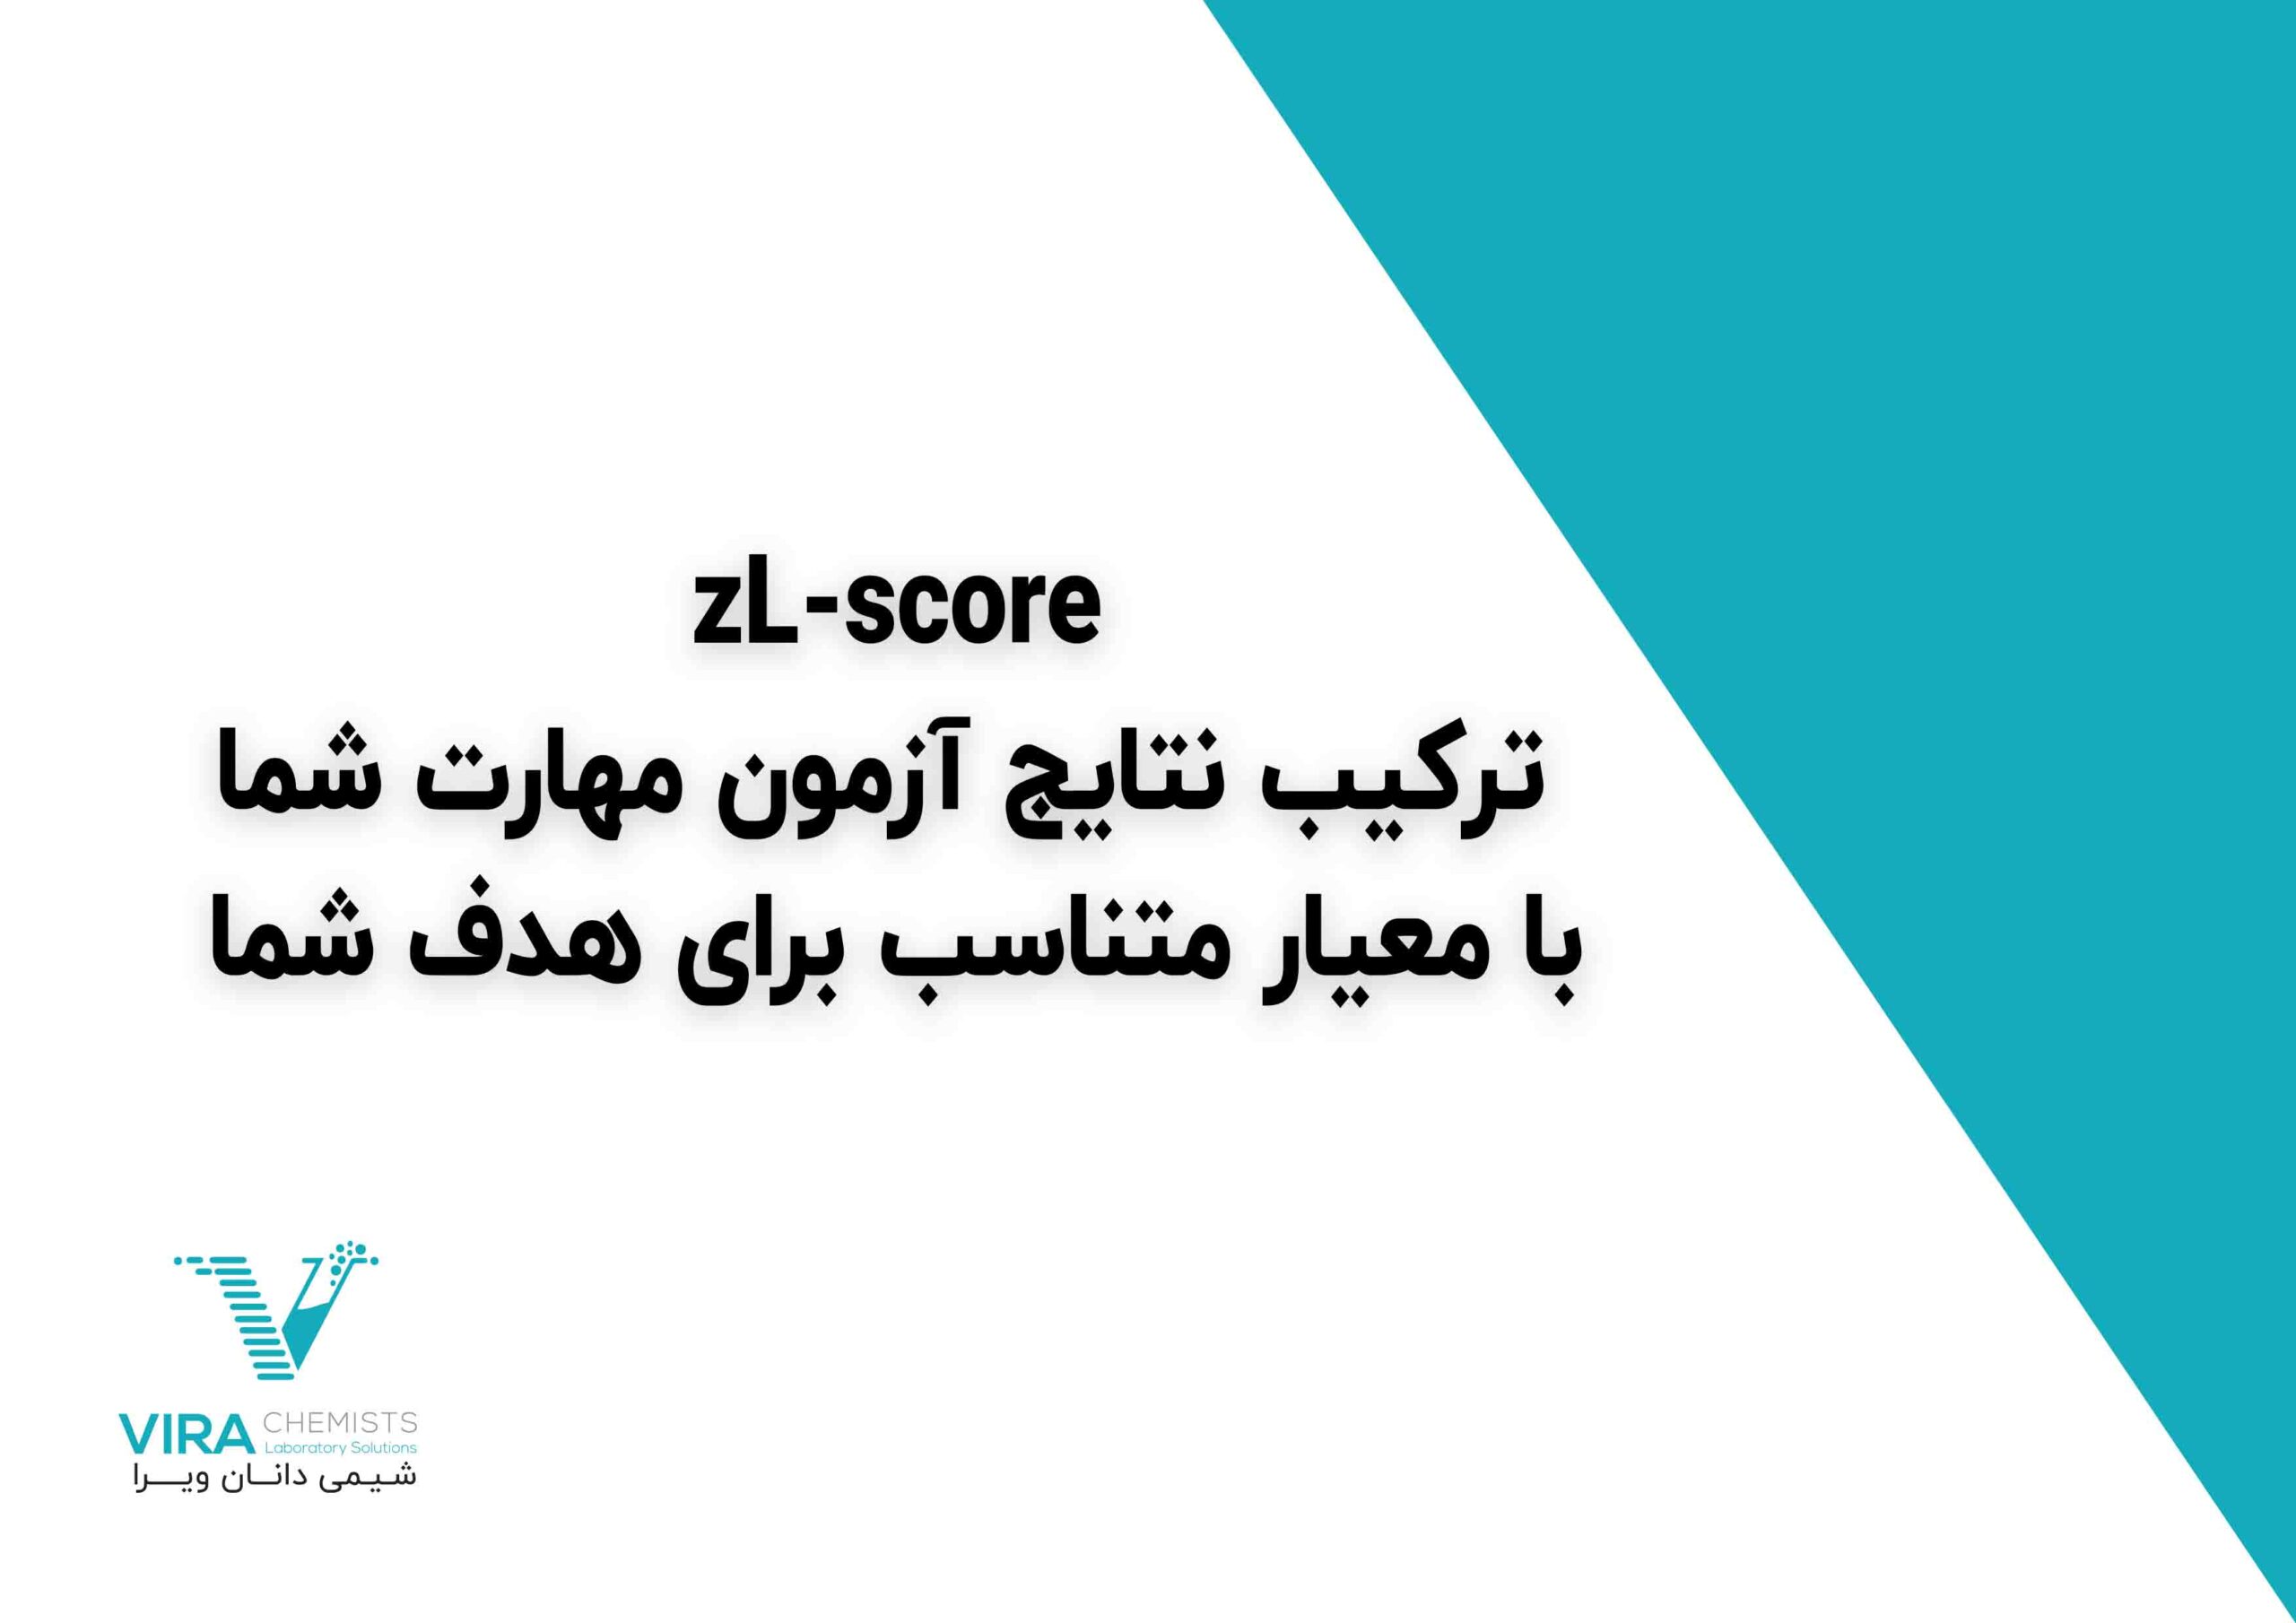 zL-score ترکیب نتایج آزمون مهارت شما با معیار متناسب برای هدف شما